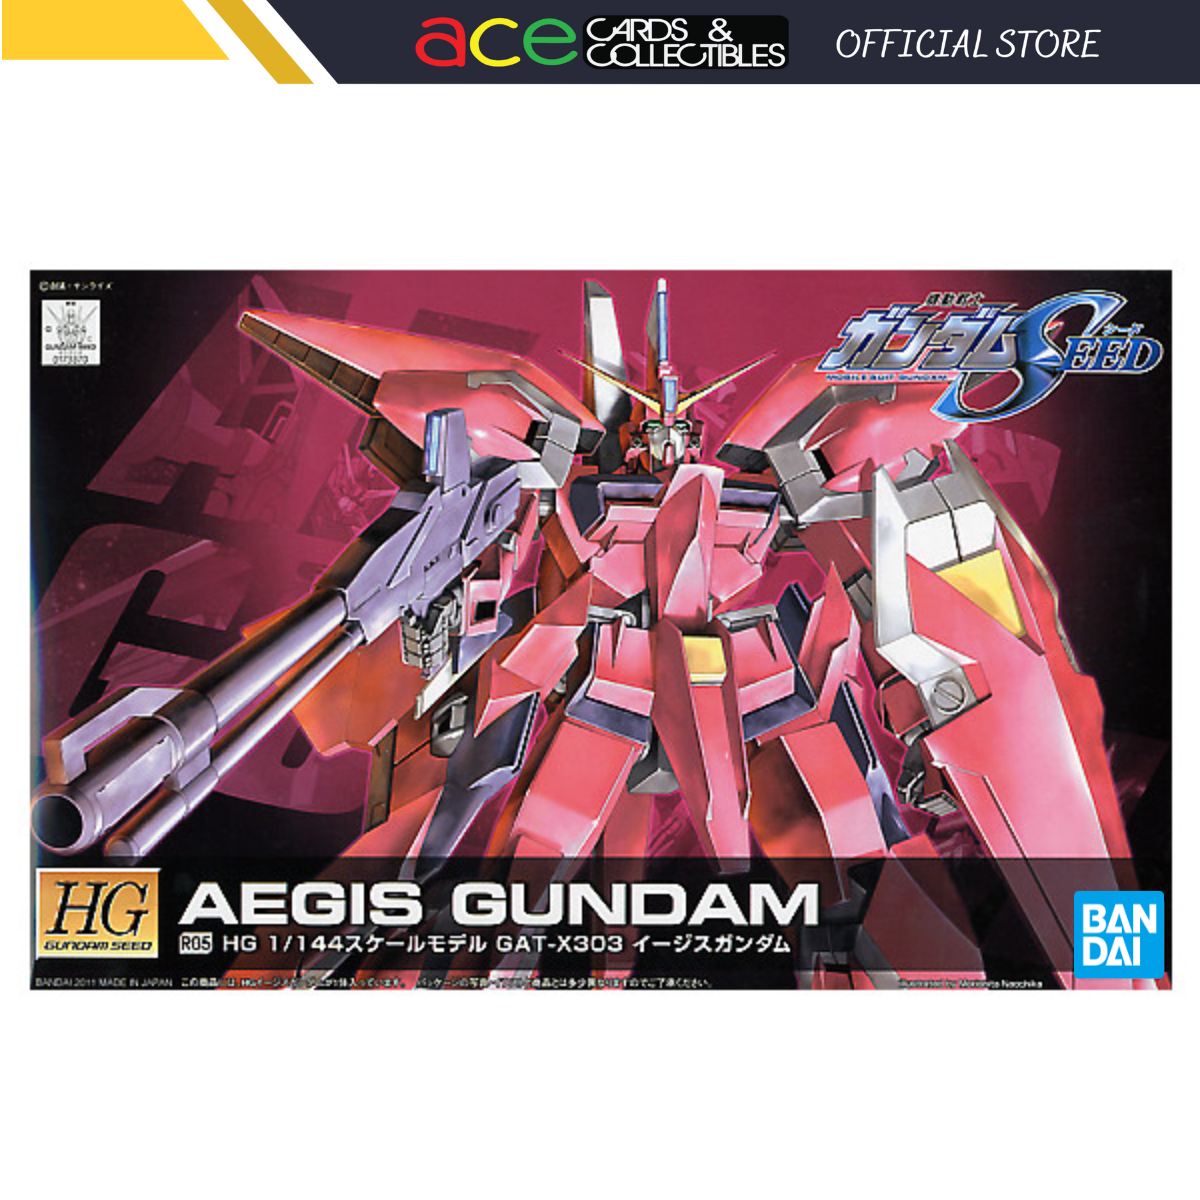 Gunpla HG R05 Aegis Gundam-Bandai-Ace Cards & Collectibles